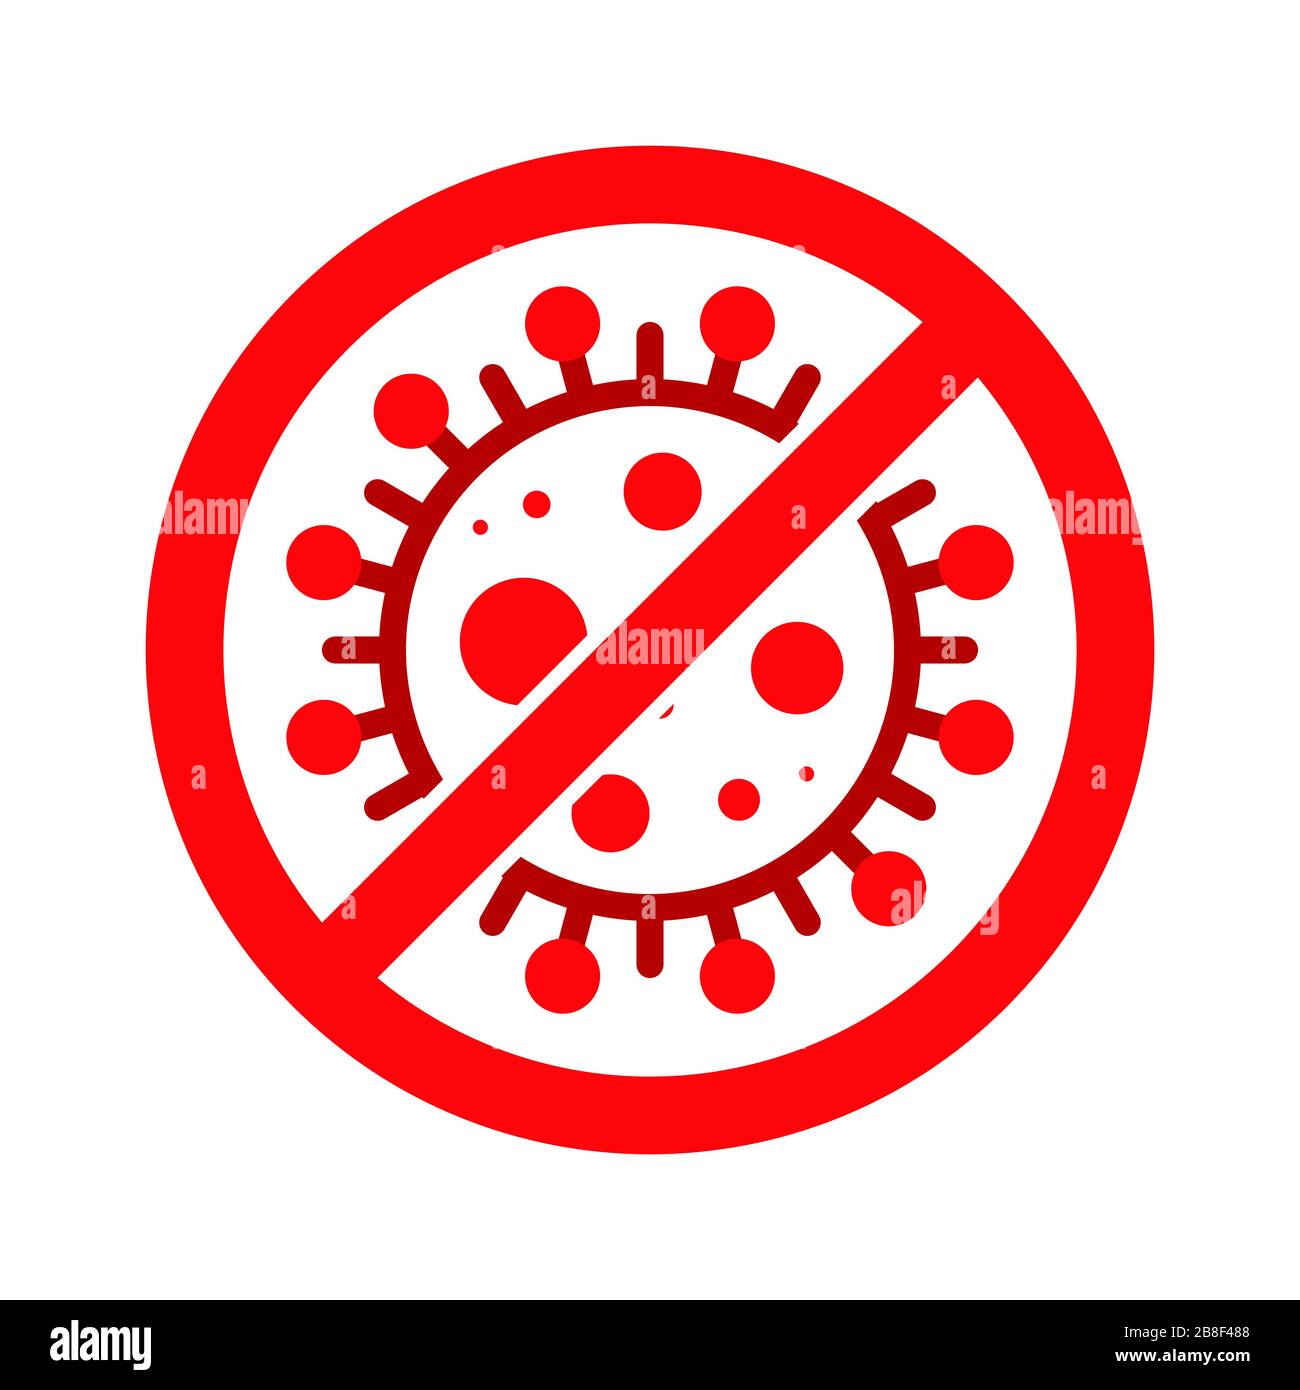 Wuhan Corona virus, Covid-19, nCOV, MERS-COV Novel Coronavirus Stop, Block, Anti Stamp. Vecteur rouge 2019-2020. Avertissement, symbole de protection. Code 19 Illustration de Vecteur